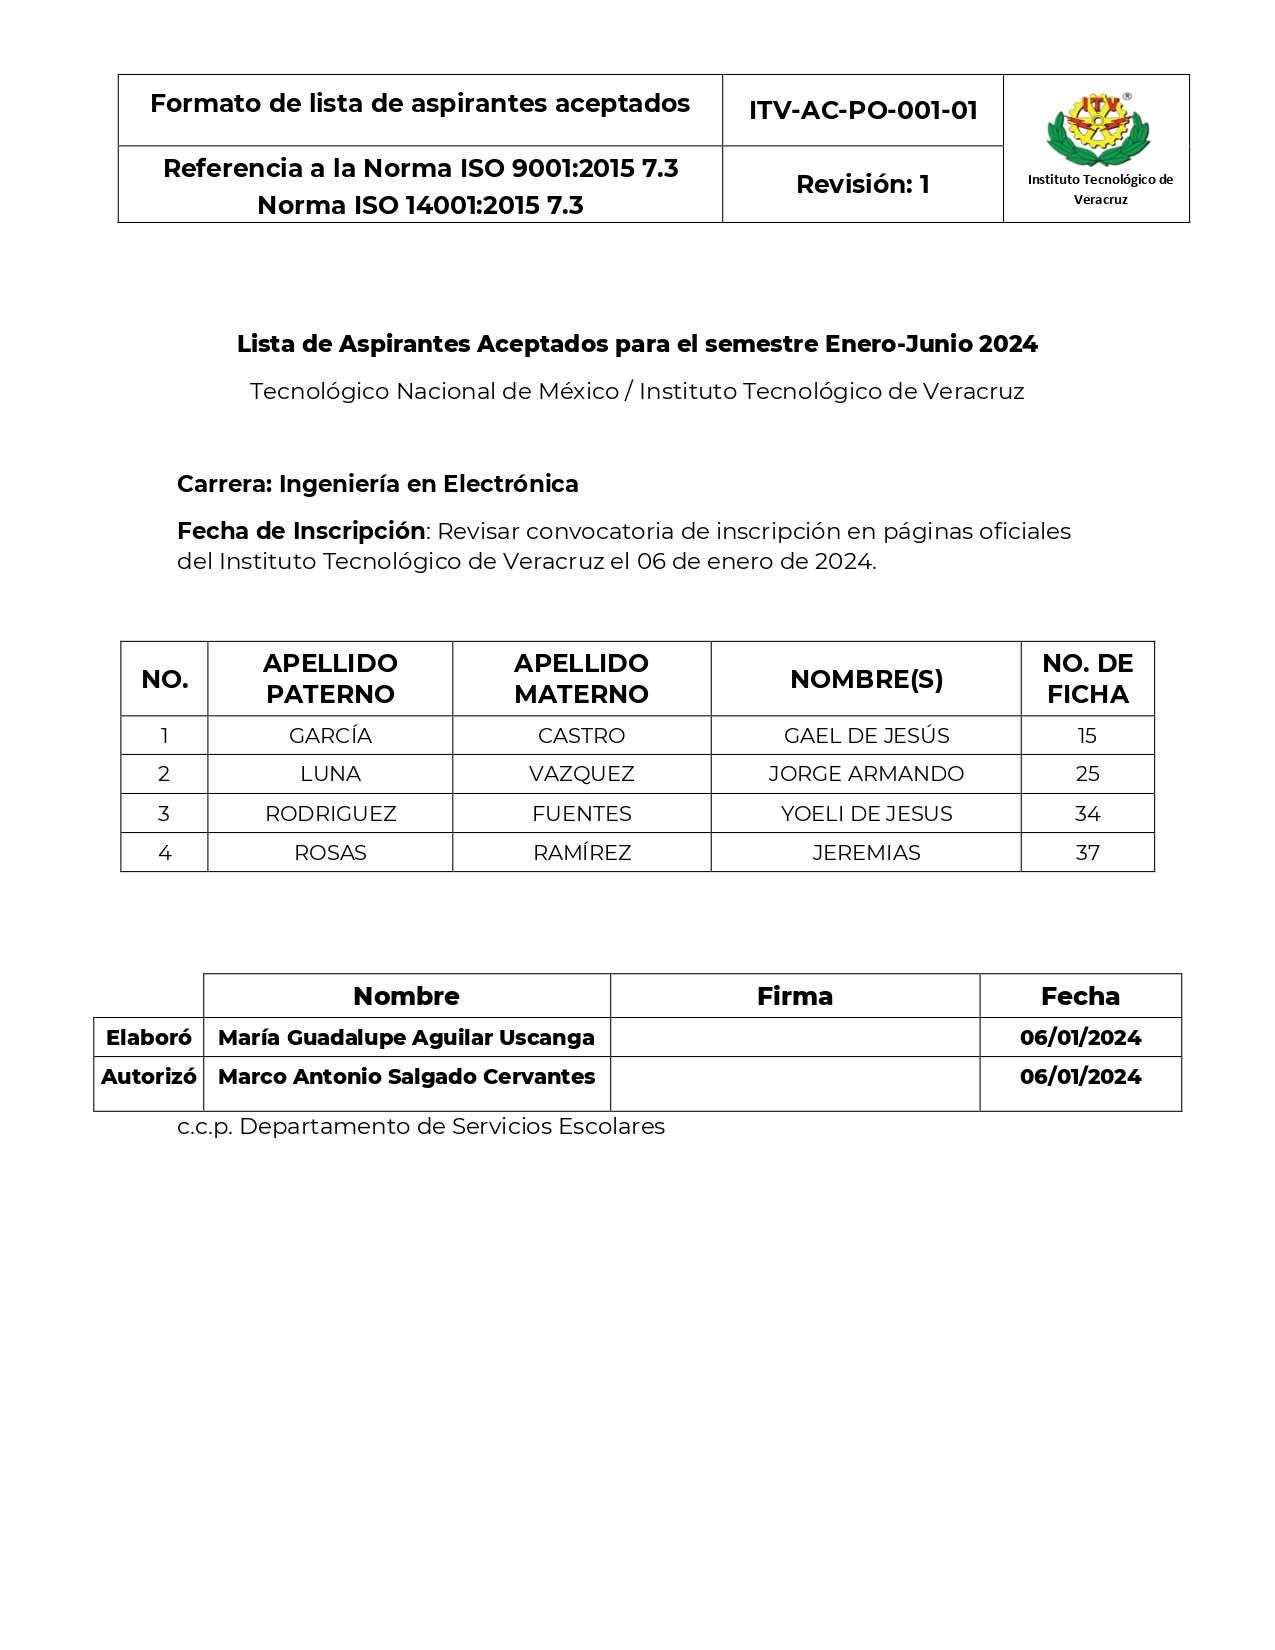 Lista_de_Aspirantes_Aceptados_por_Examen_page-0002.jpg